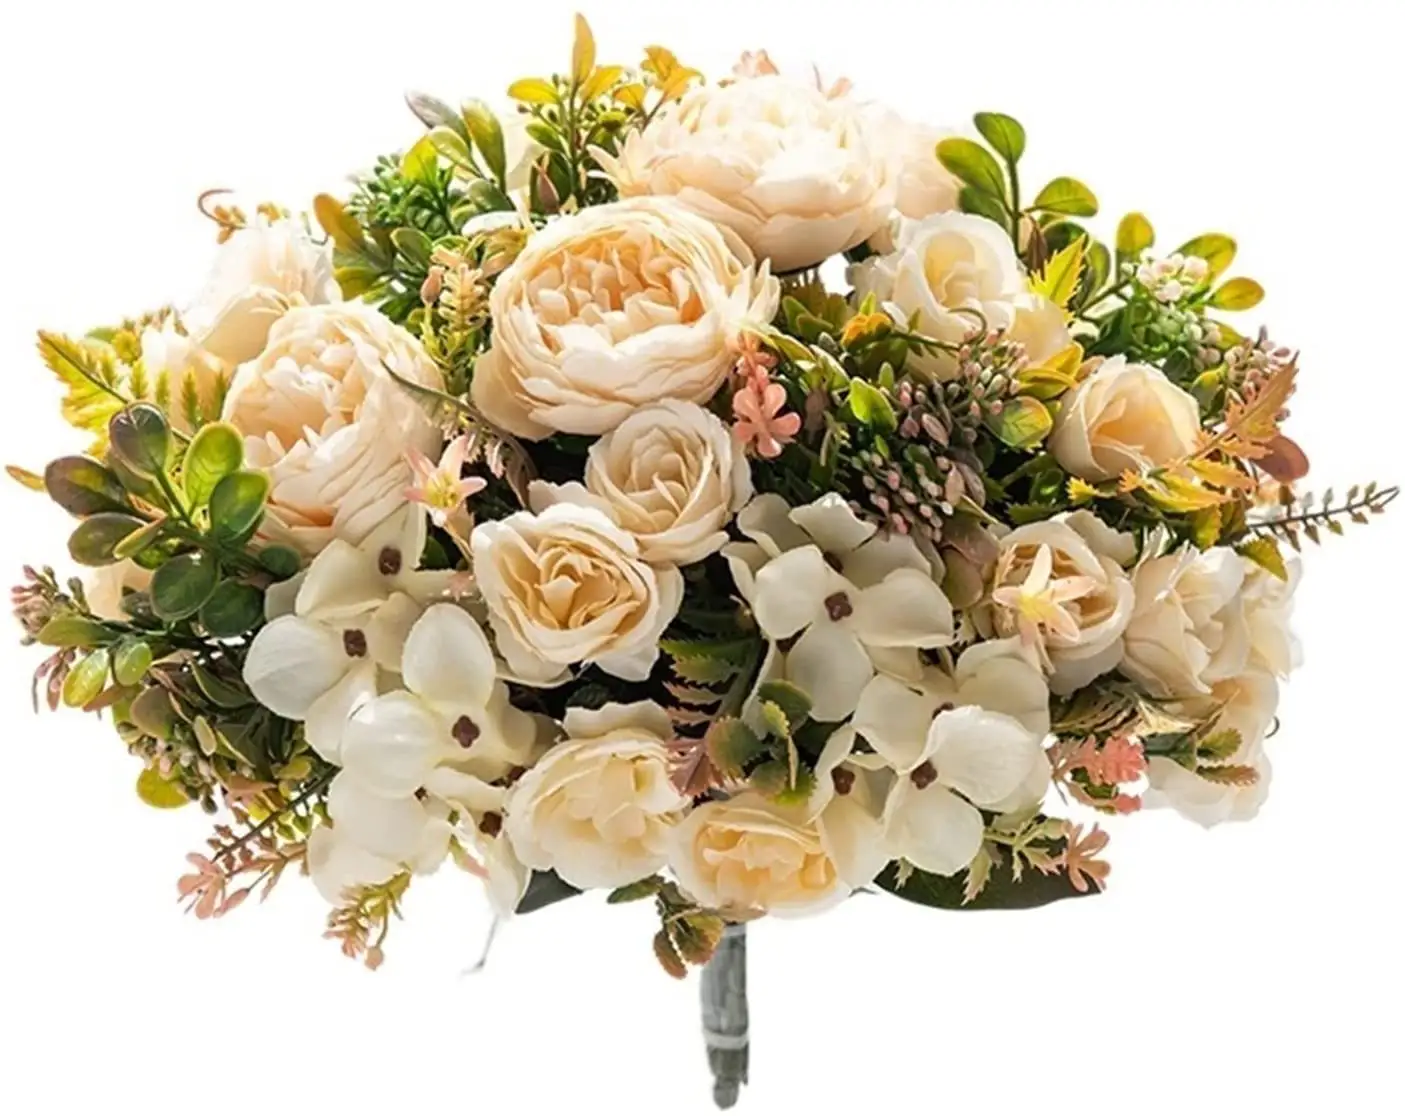 AD-006 สินค้ายอดนิยม ดอกไม้ประดิษฐ์ ดอกโบตั๋นผ้าไหม ช่อดอกไม้ ของตกแต่งบ้าน ดอกกุหลาบปลอม